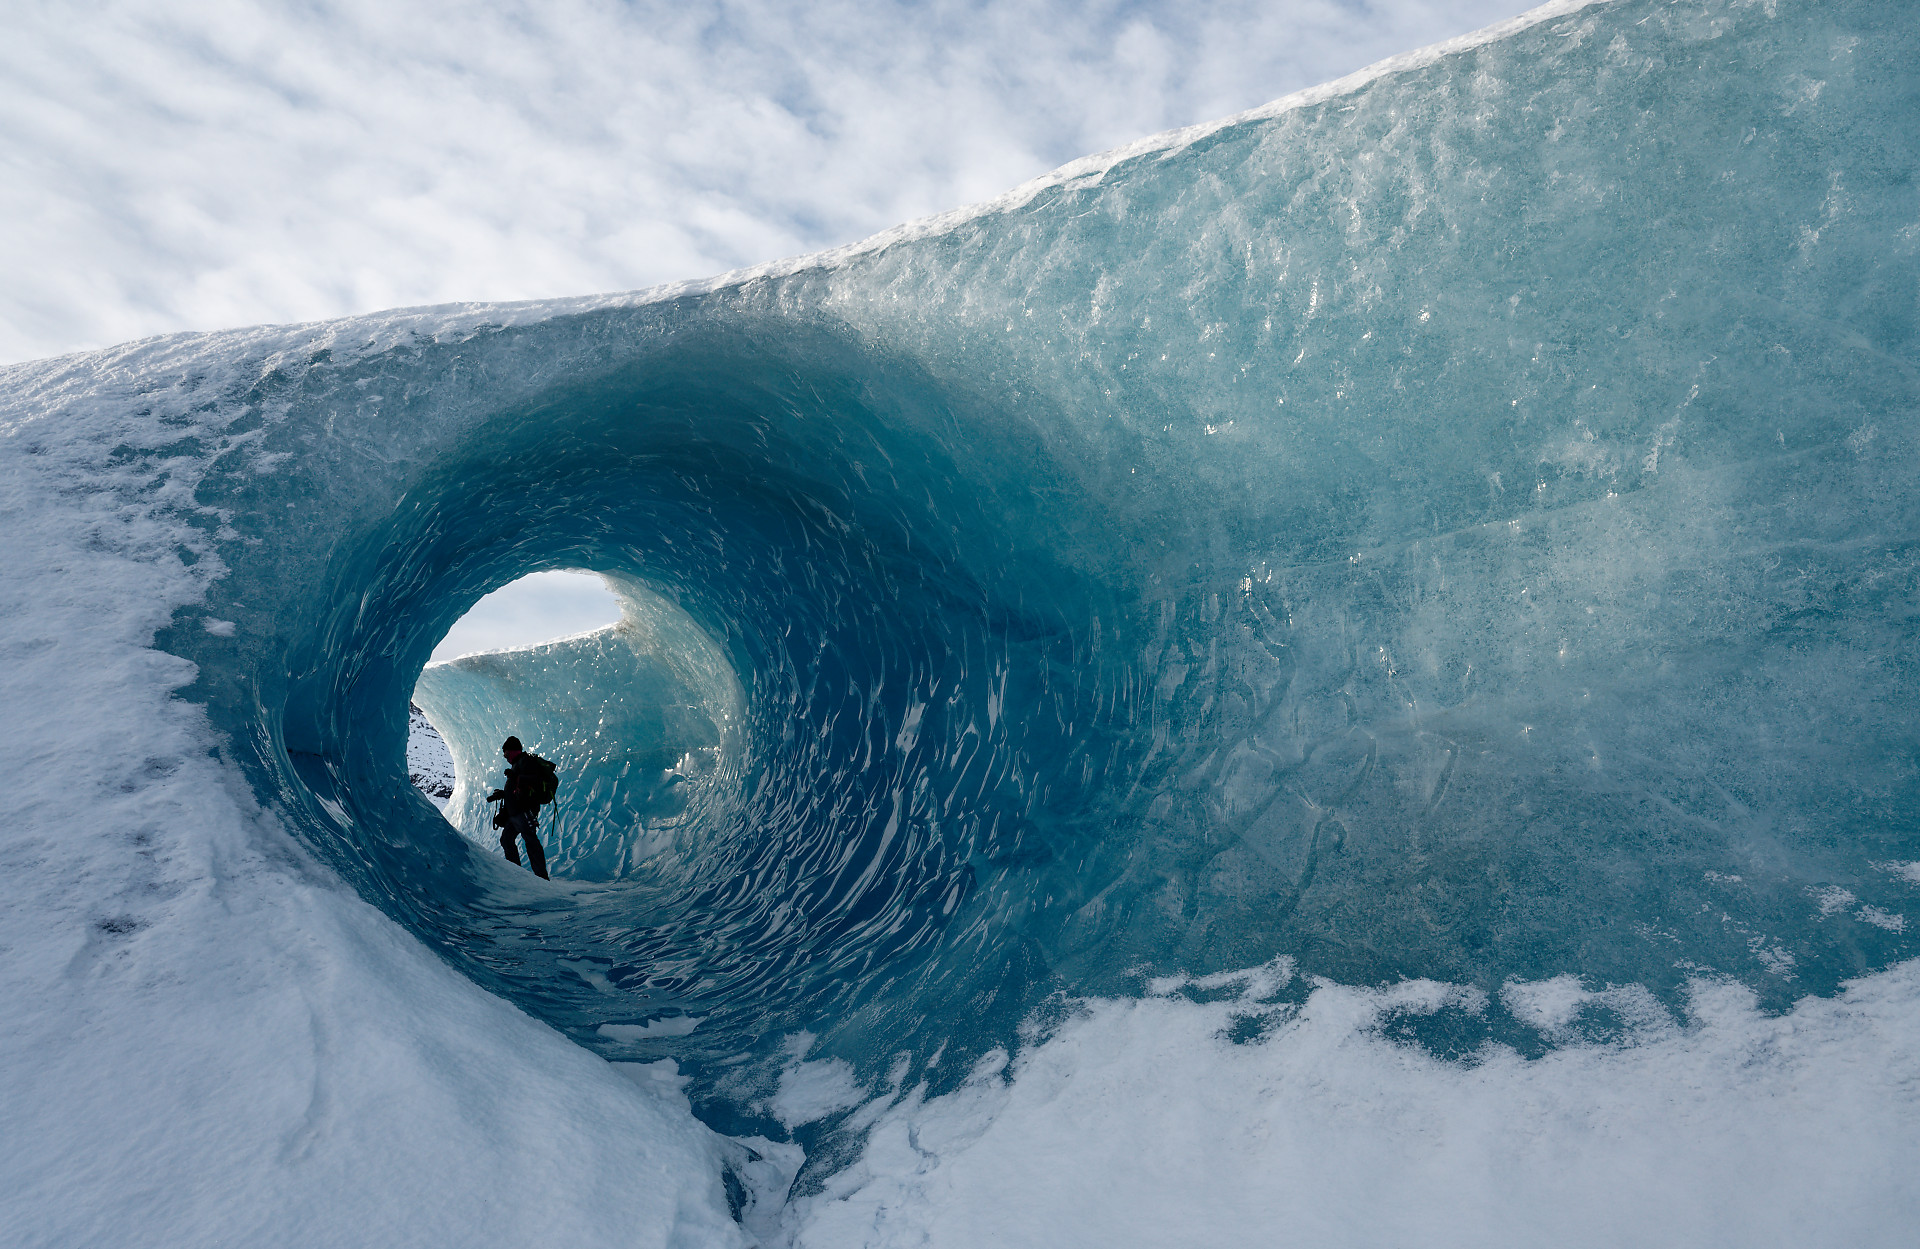 Grotte de glace dans un iceberg de Heinabergslon